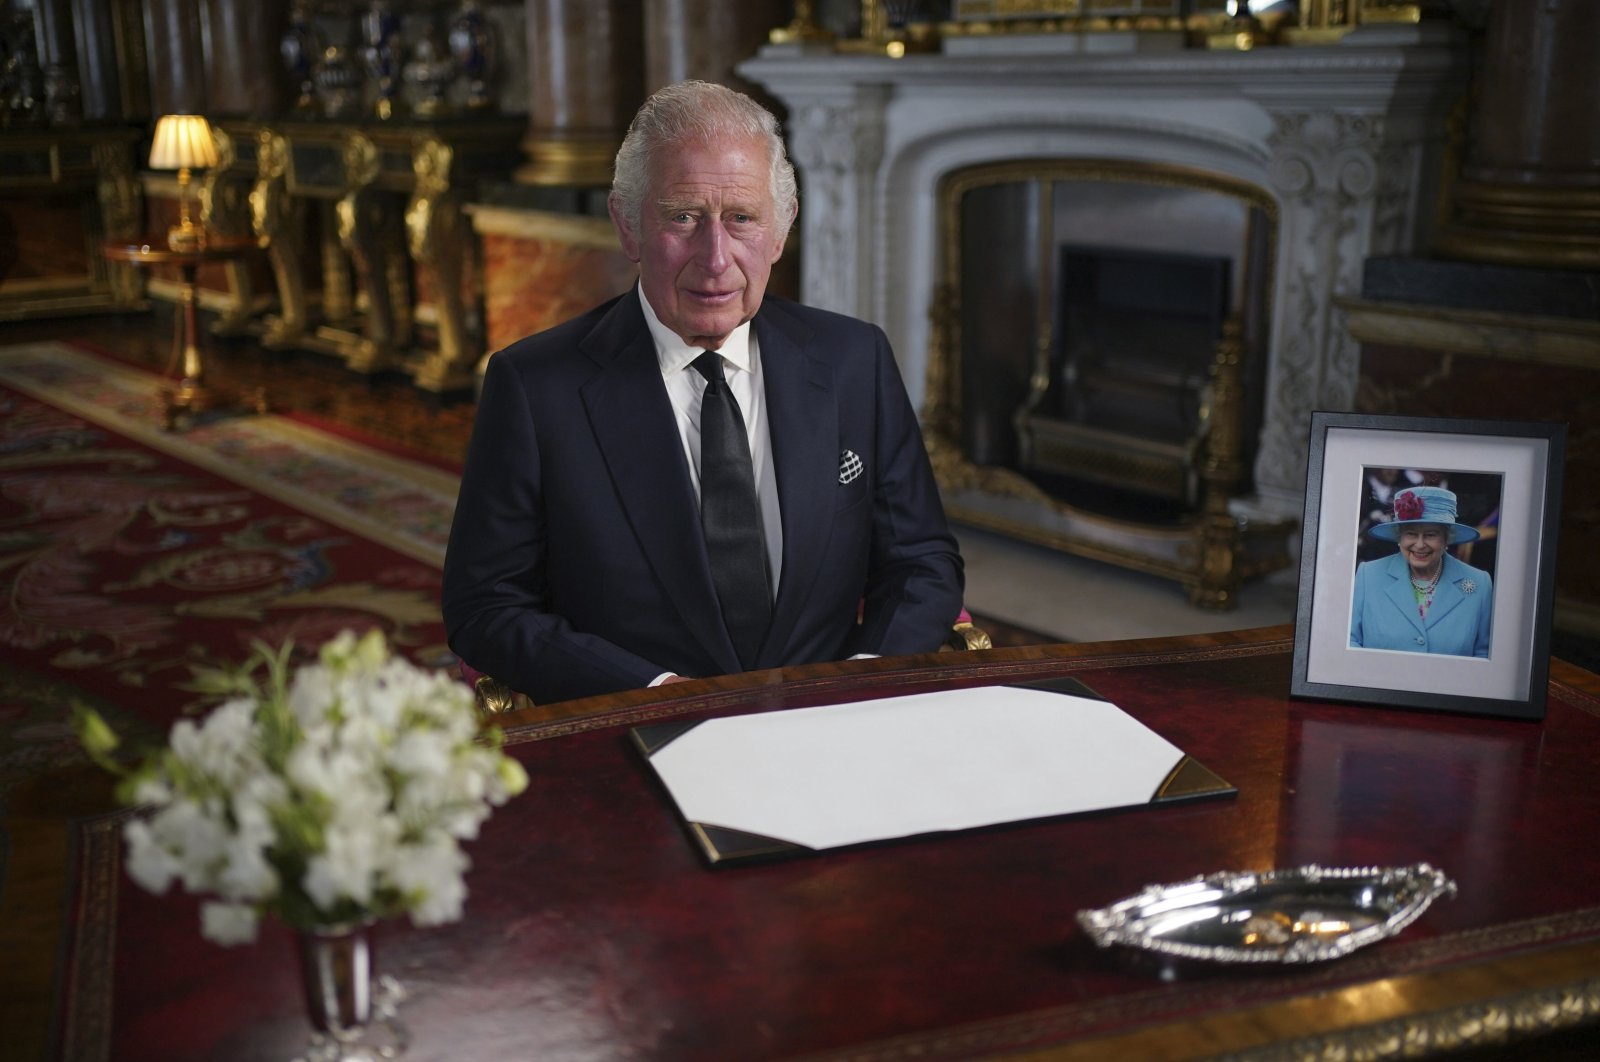 King Charles pledges to serve nation in 1st address